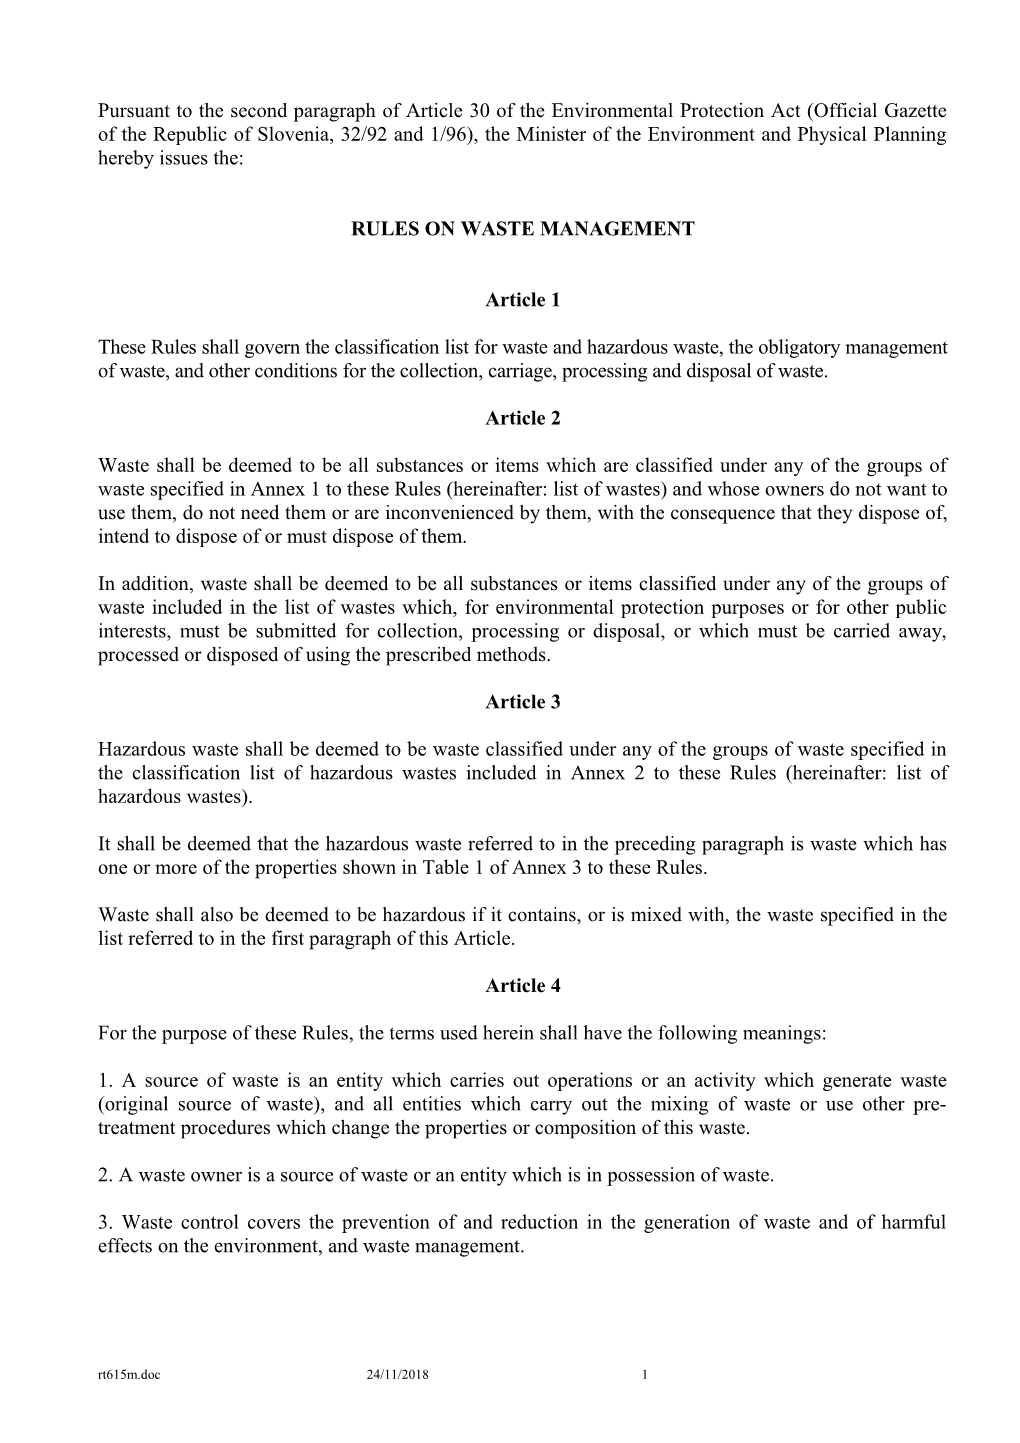 Na Podlagi Drugega Odstavka 30. Člena Zakona O Varstvu Okolja (Uradni List RS, Št. 32/92